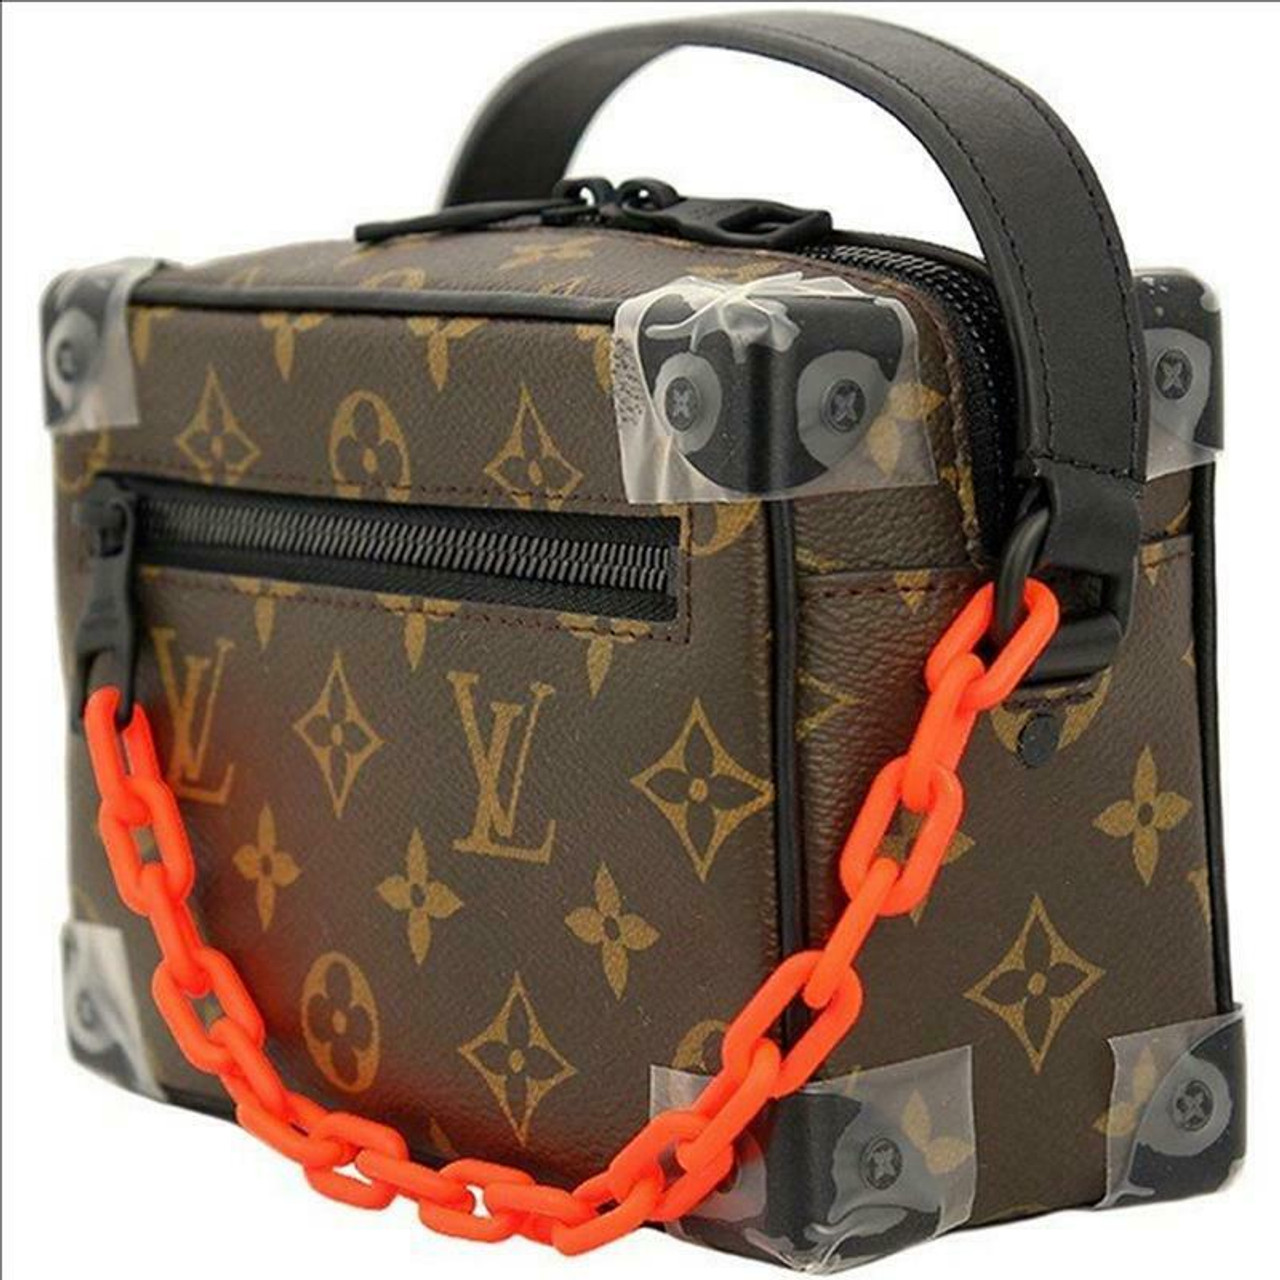 CHN LOUIS VUITTON SOFT TRUNK Handbag 103737 – Onlykikaybox